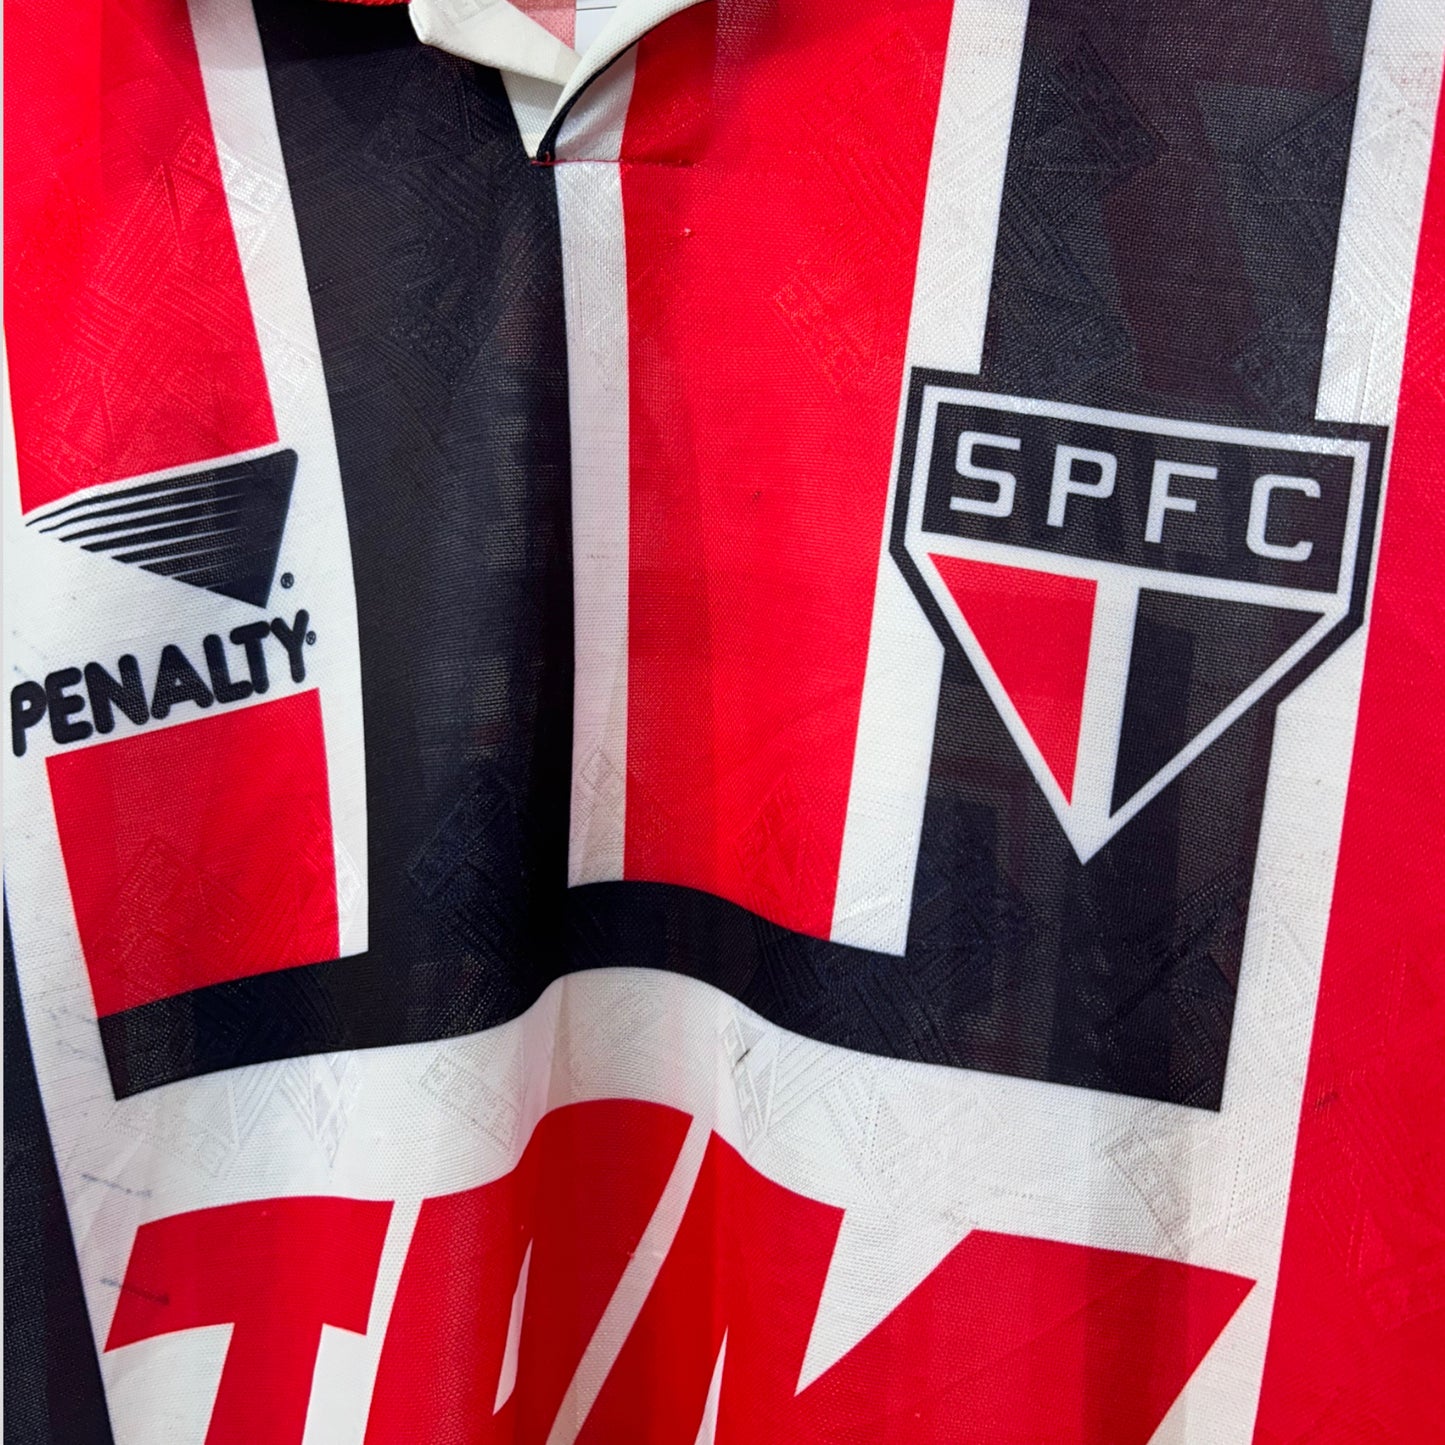 Sao Paulo 1993/95 Away Shirt - #10 (Large)